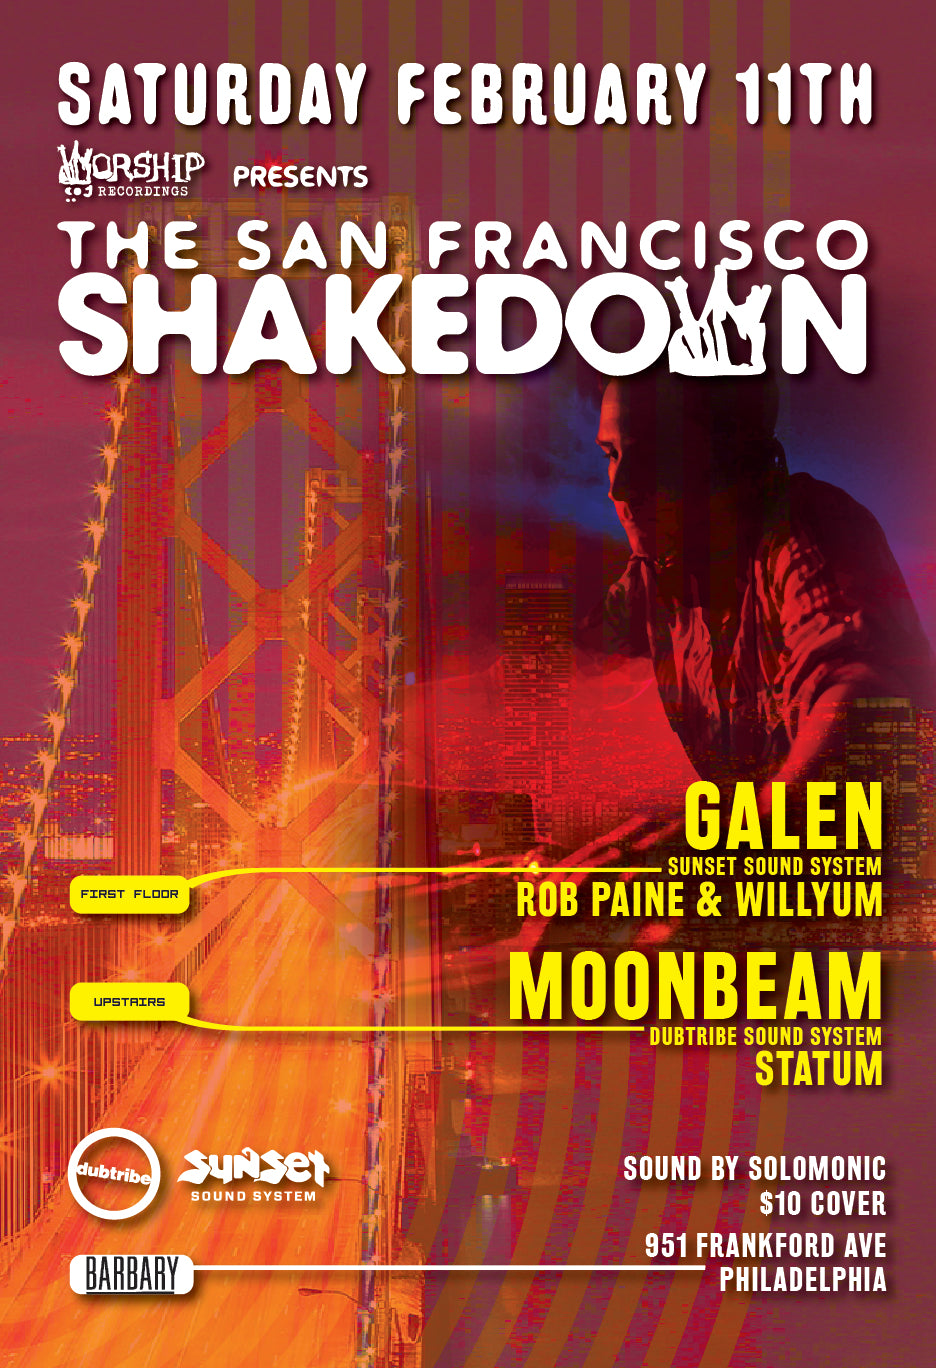 The San Francisco Shakedown Worship Recordings